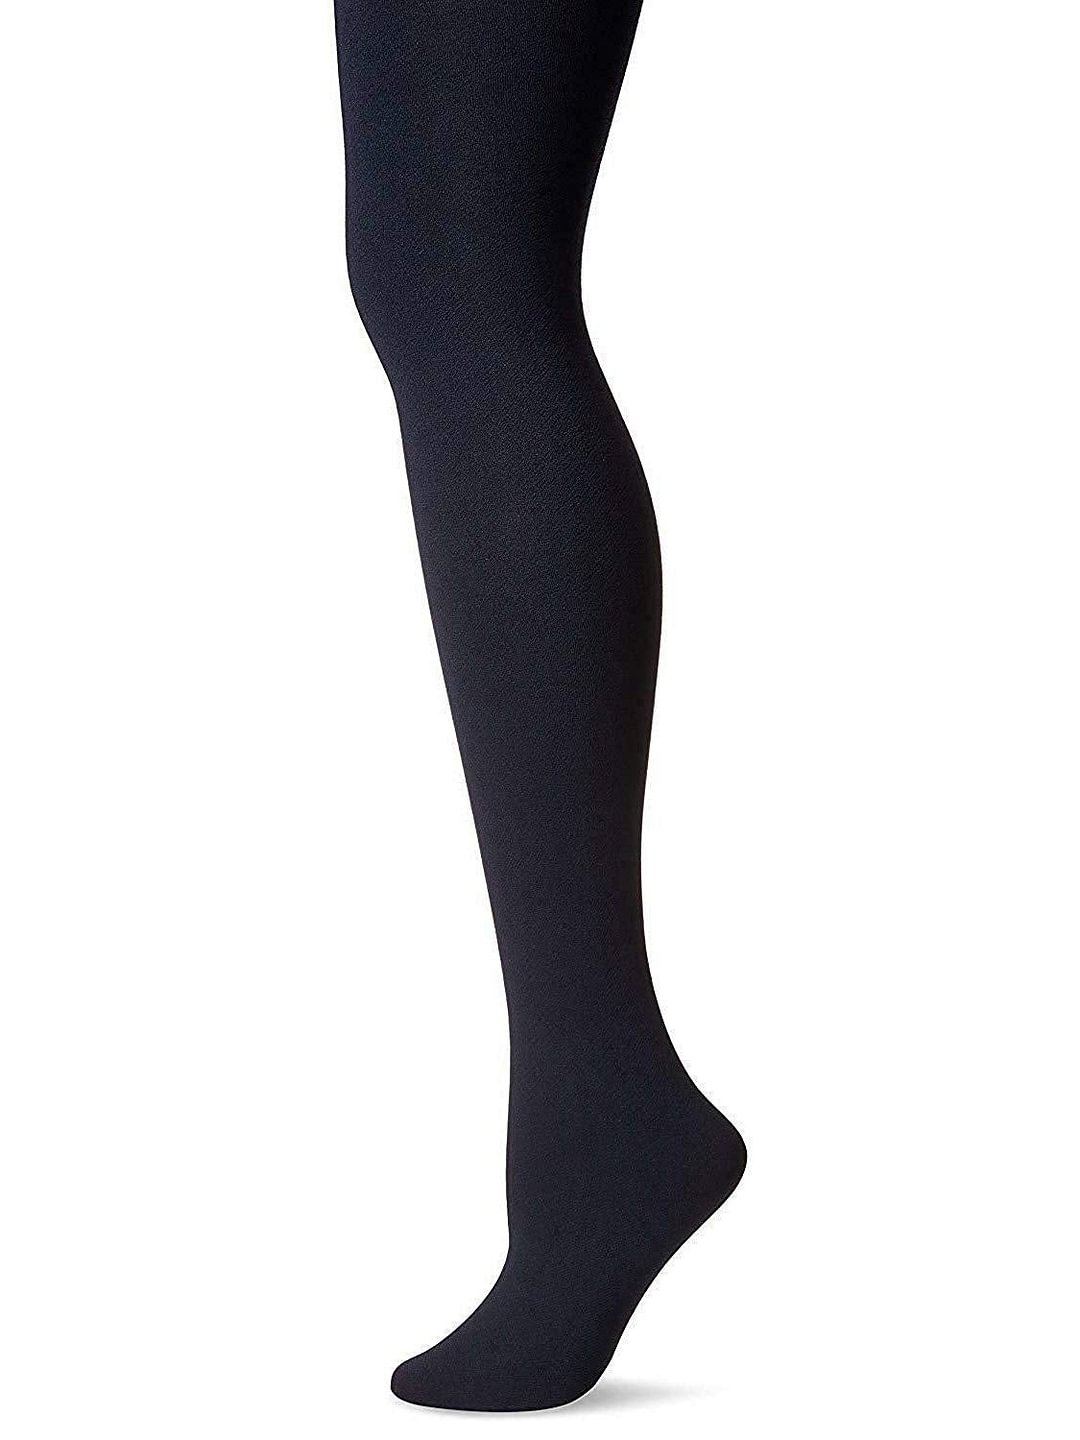 Women's Cozy Tight with Fleece-Lined Leg